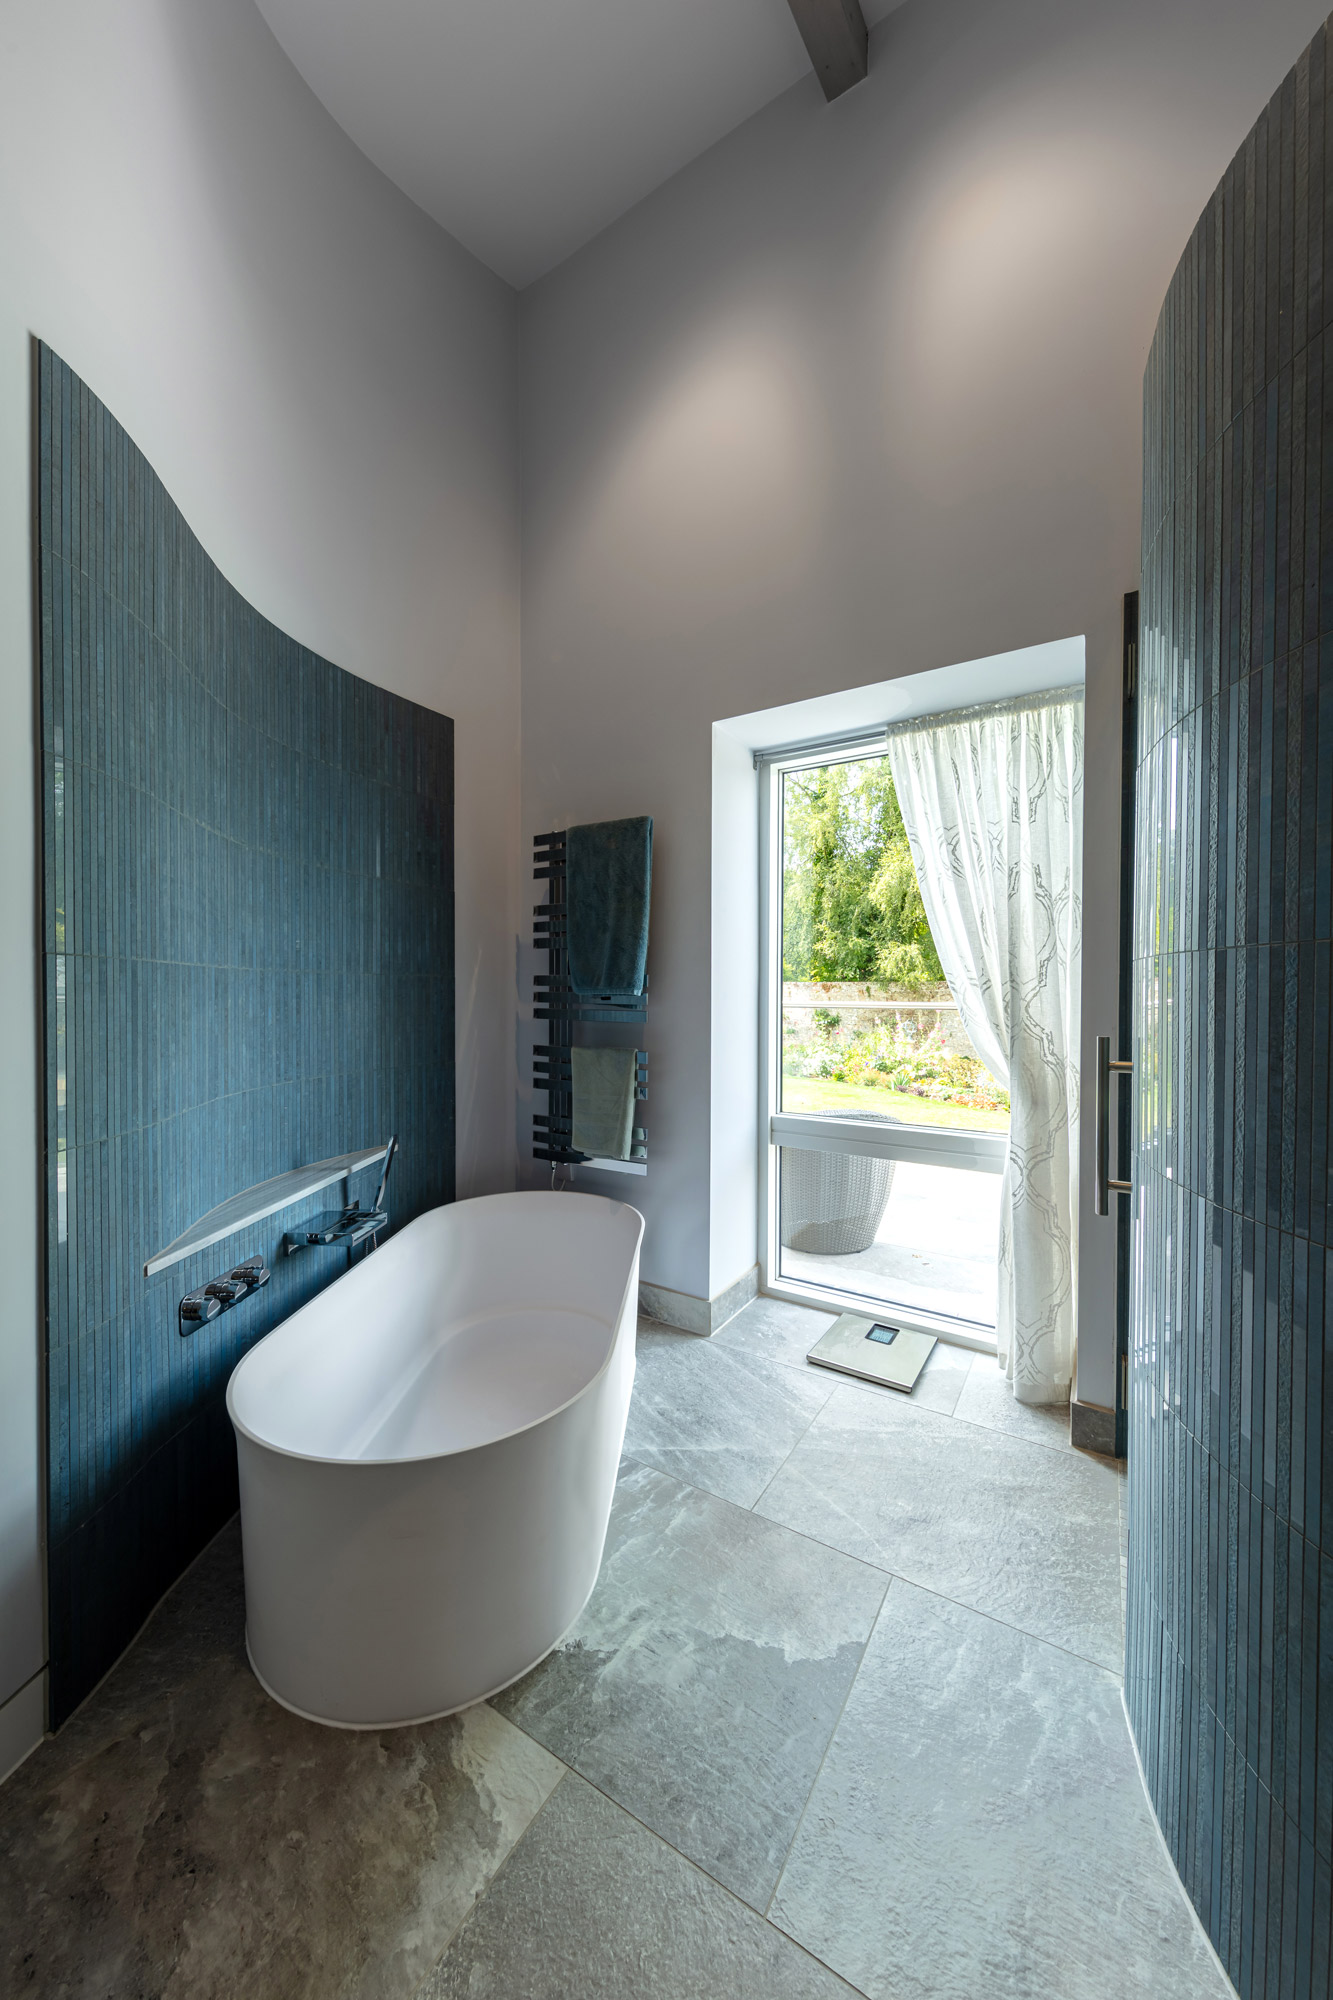 Bathroom of the Zinc house. Elspeth Beard architect. built by KM Grant, Surrey